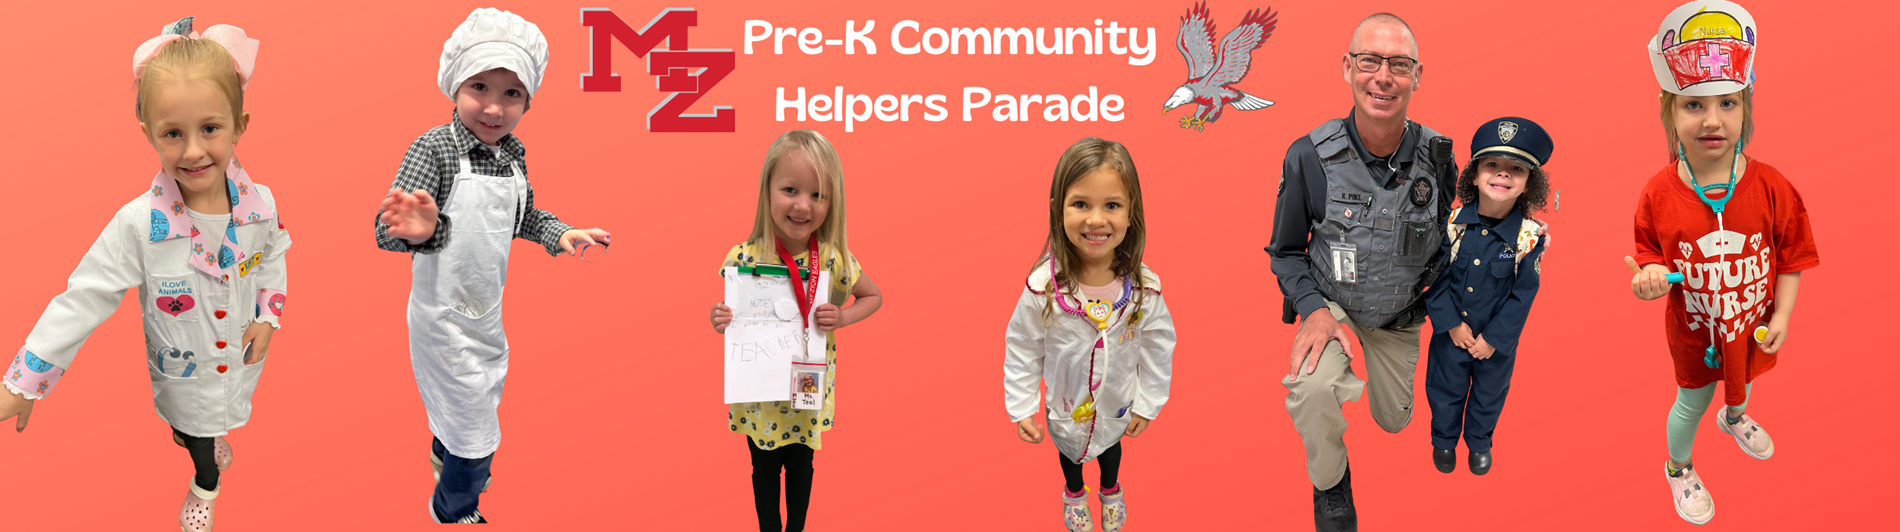 Pre-K Community Helpers Parade